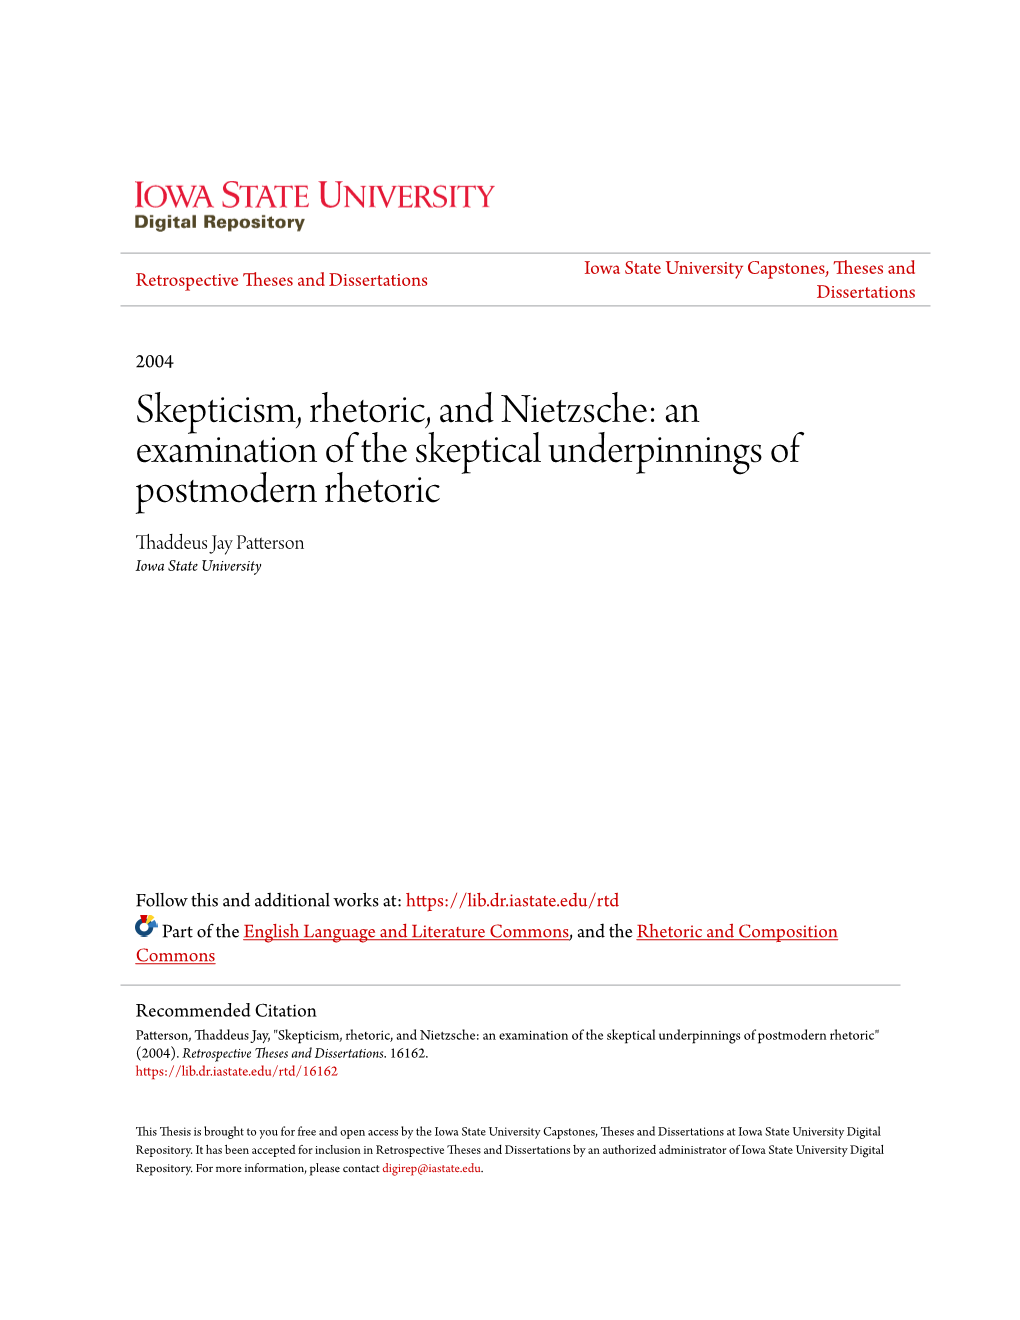 Skepticism, Rhetoric, and Nietzsche: an Examination of the Skeptical Underpinnings of Postmodern Rhetoric Thaddeus Jay Patterson Iowa State University